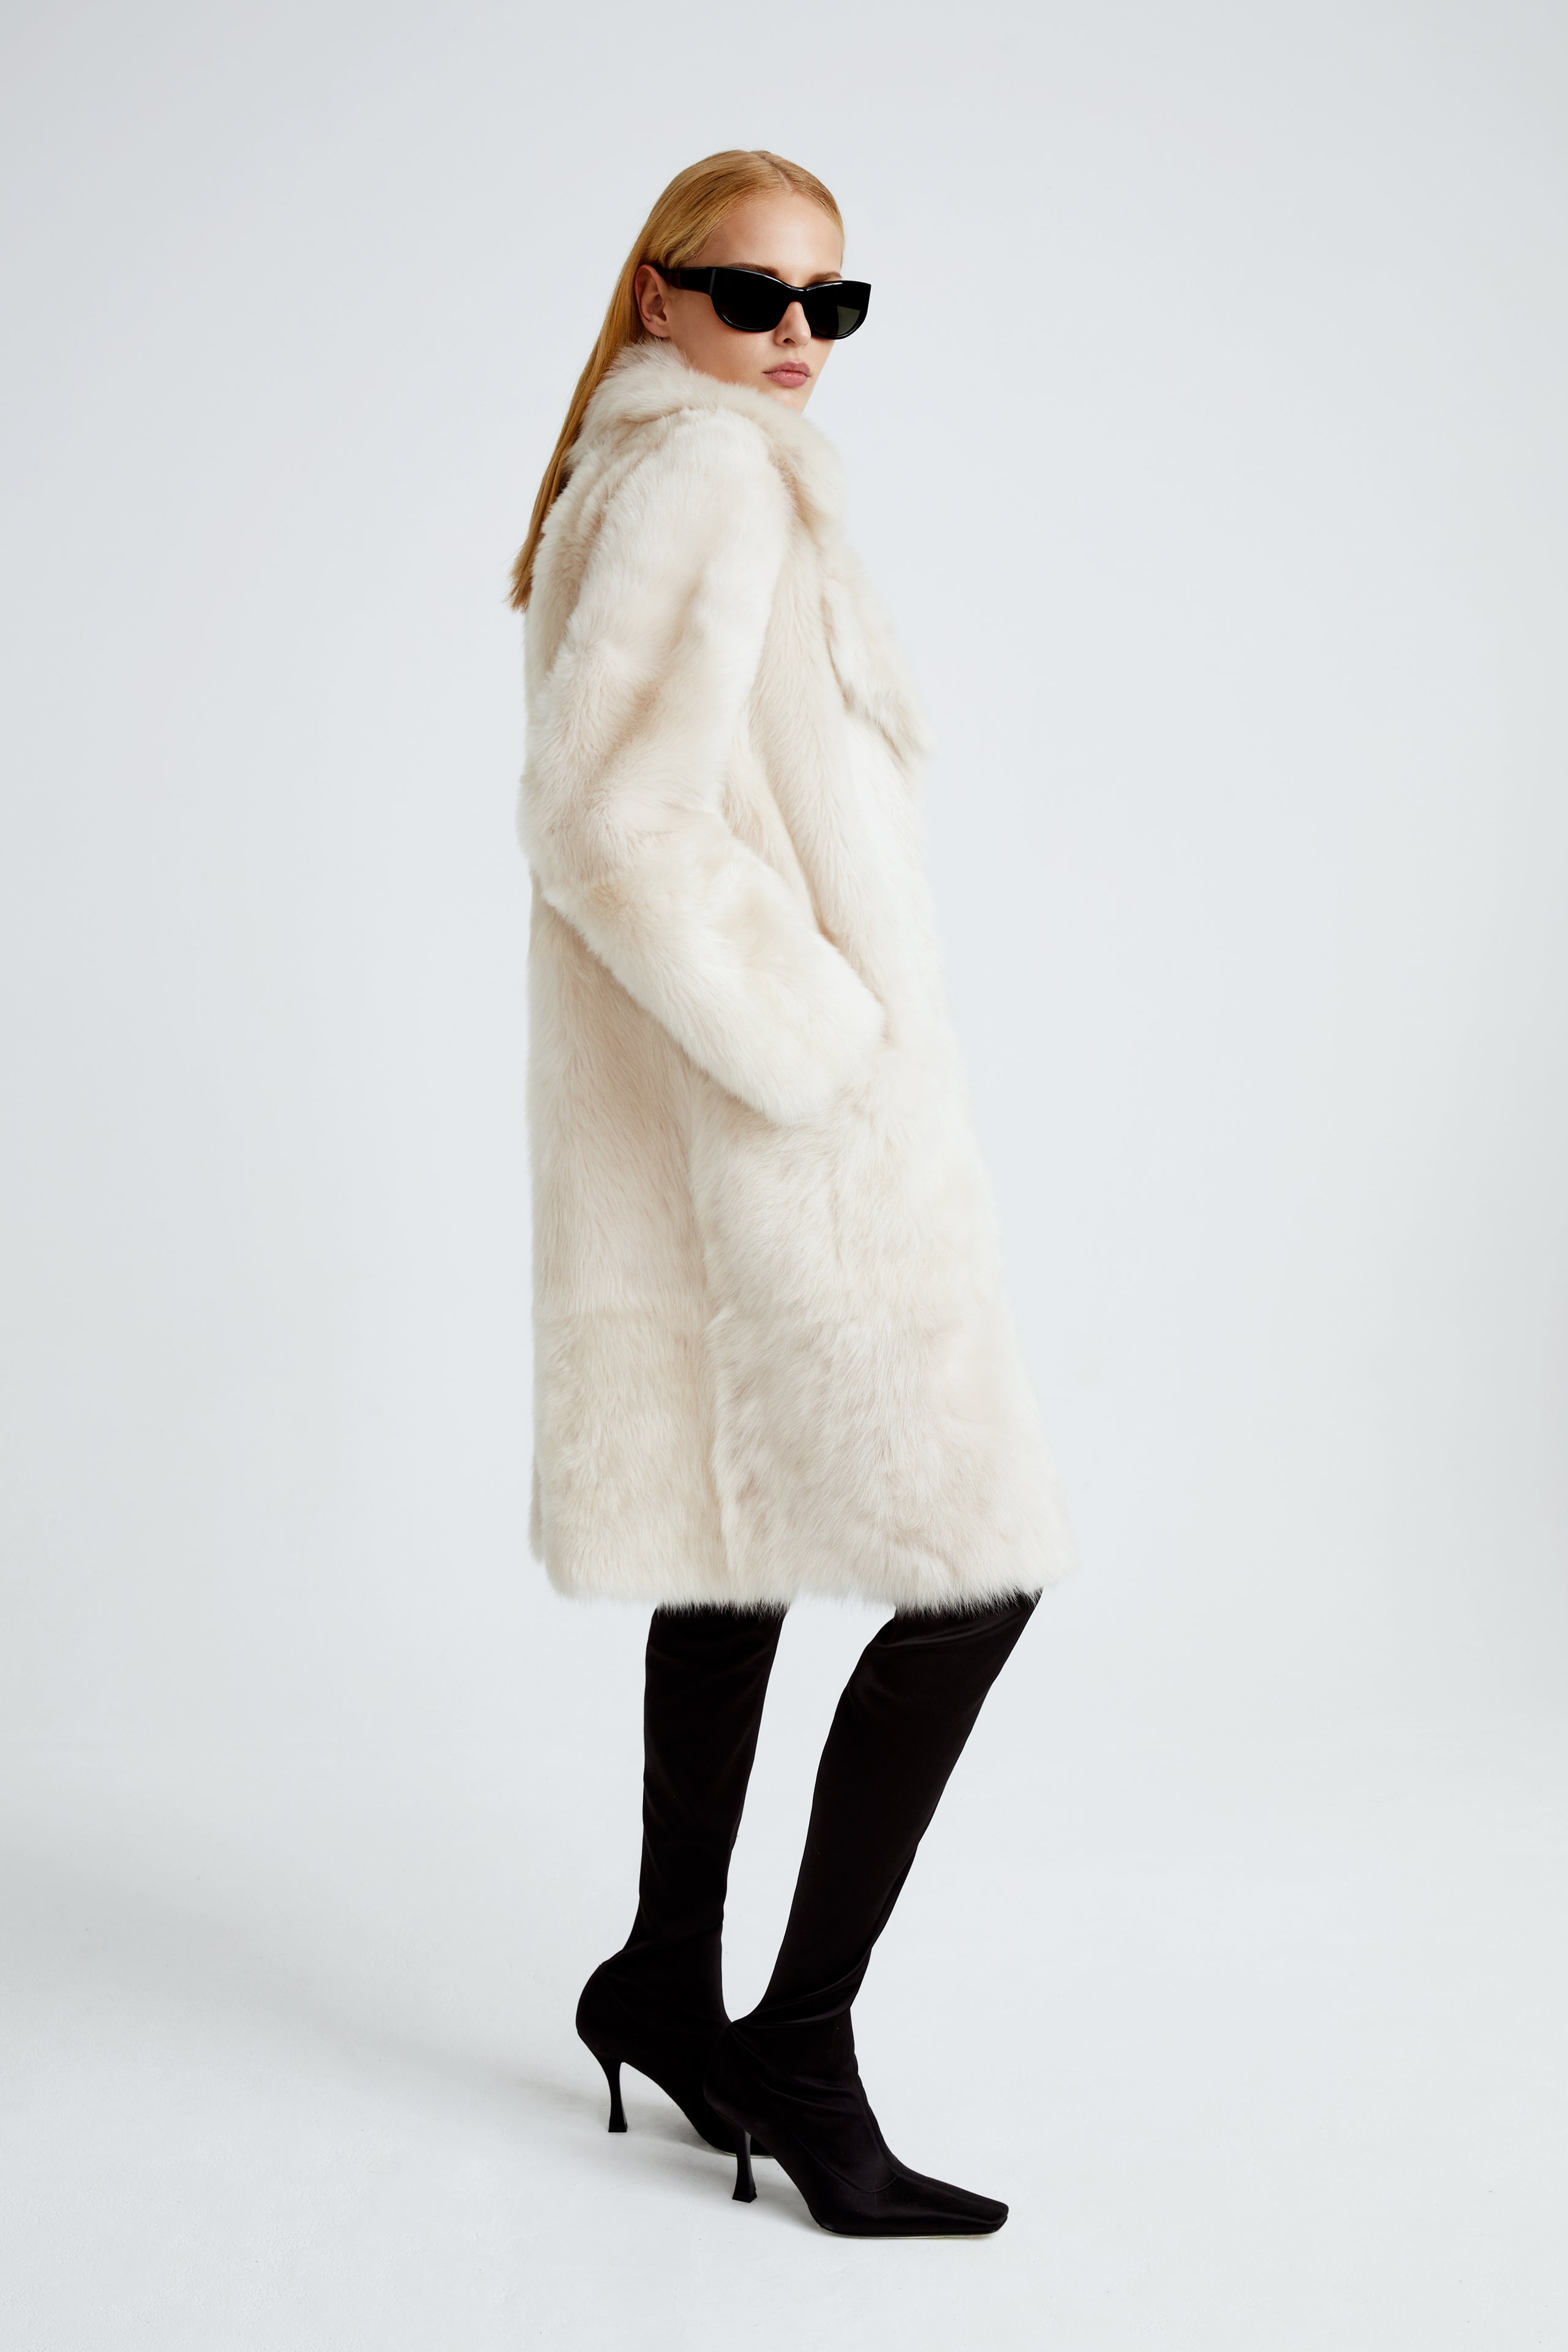 Model is wearing the Evita Cloud Après-Ski Shearling Coat Side